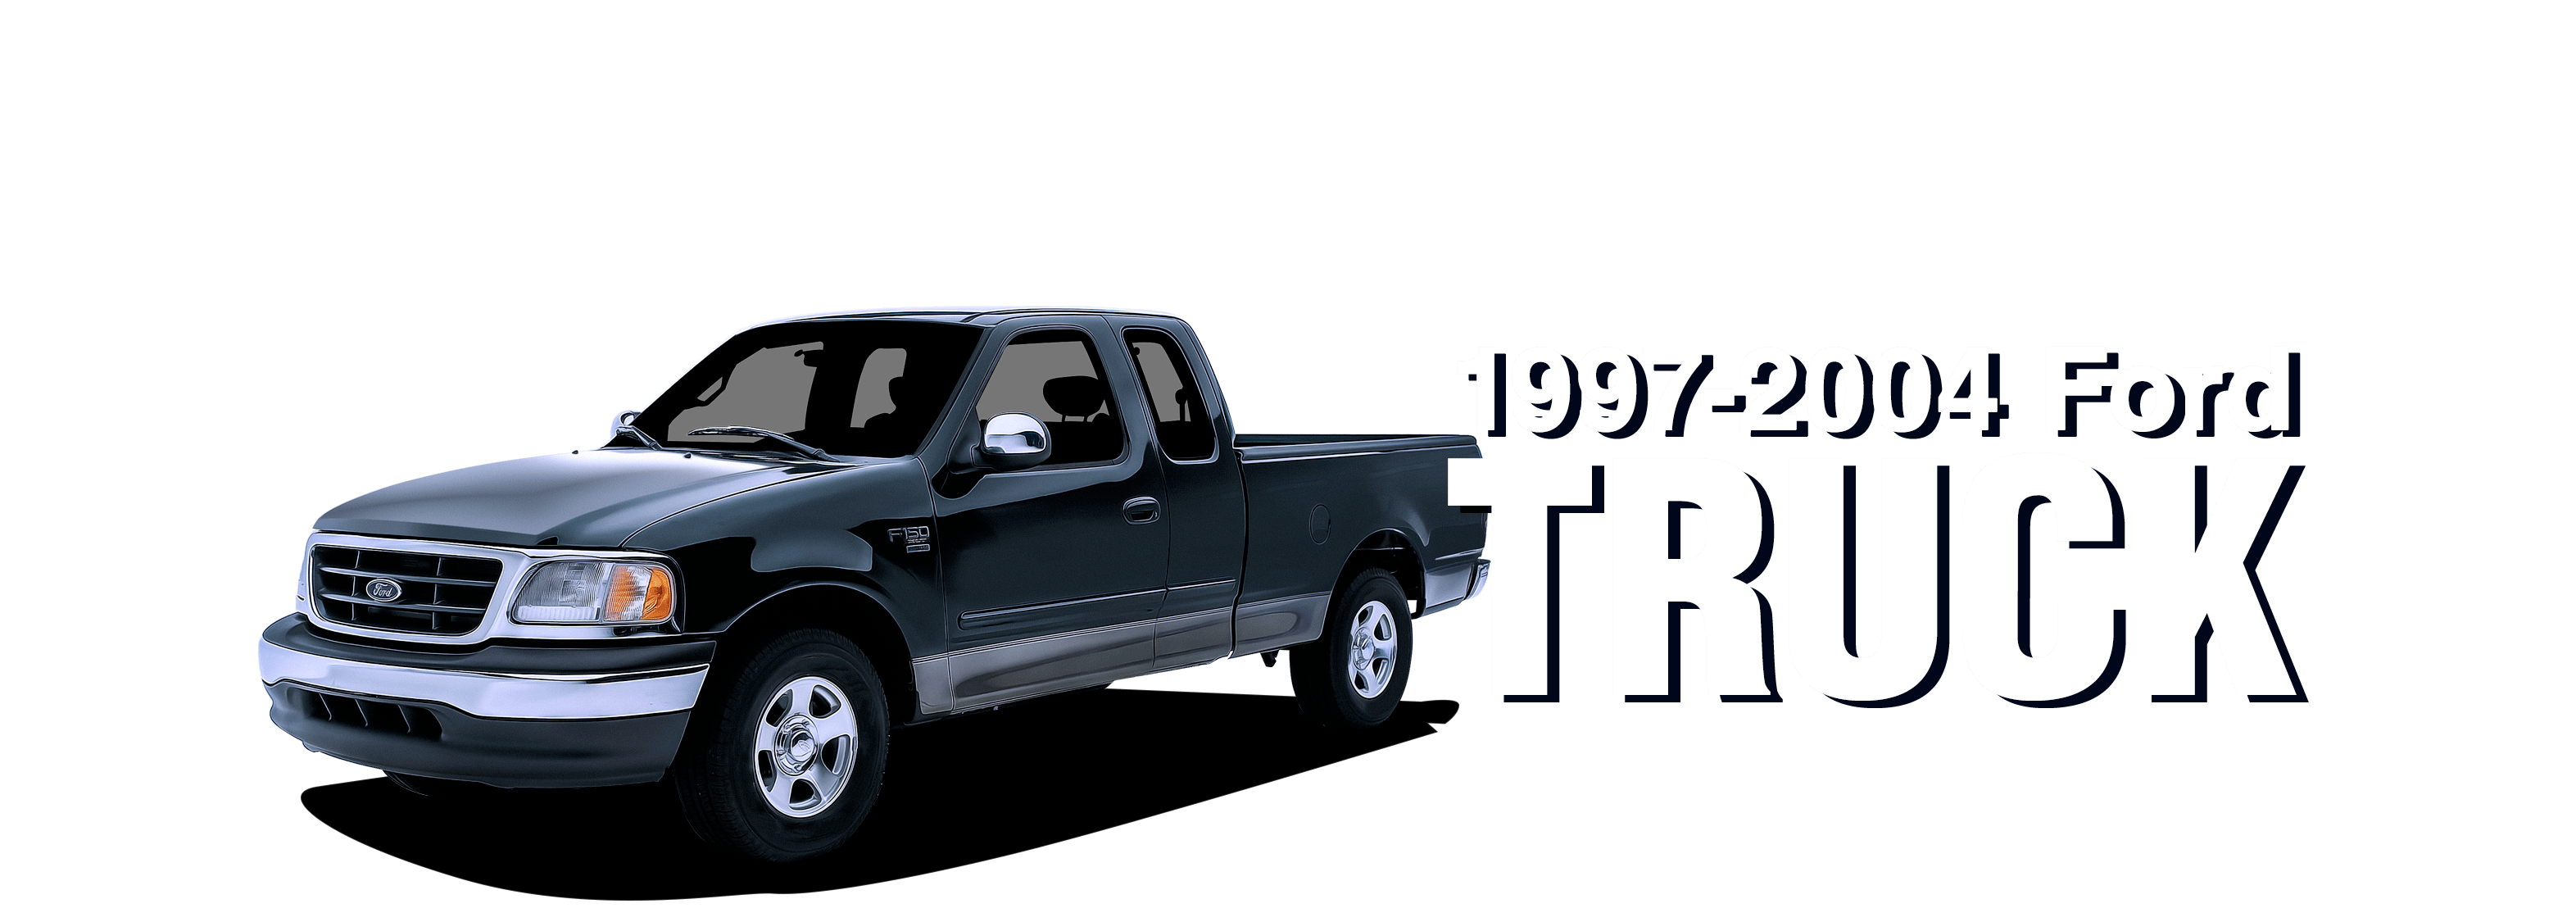 97-04FordTruck-vehicle-desktop